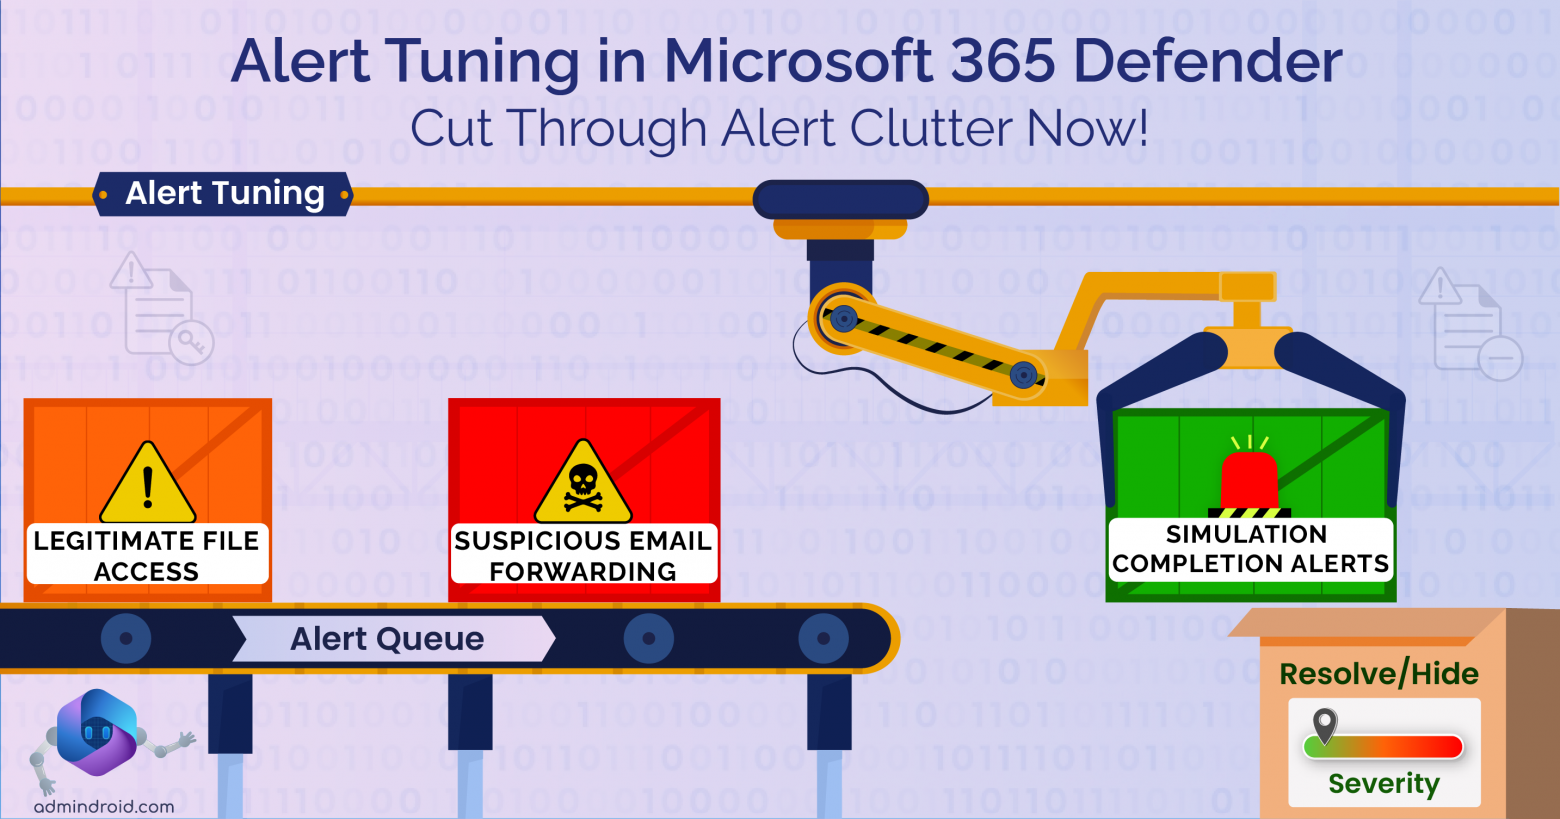 Alert Tuning in Microsoft 365 Defender